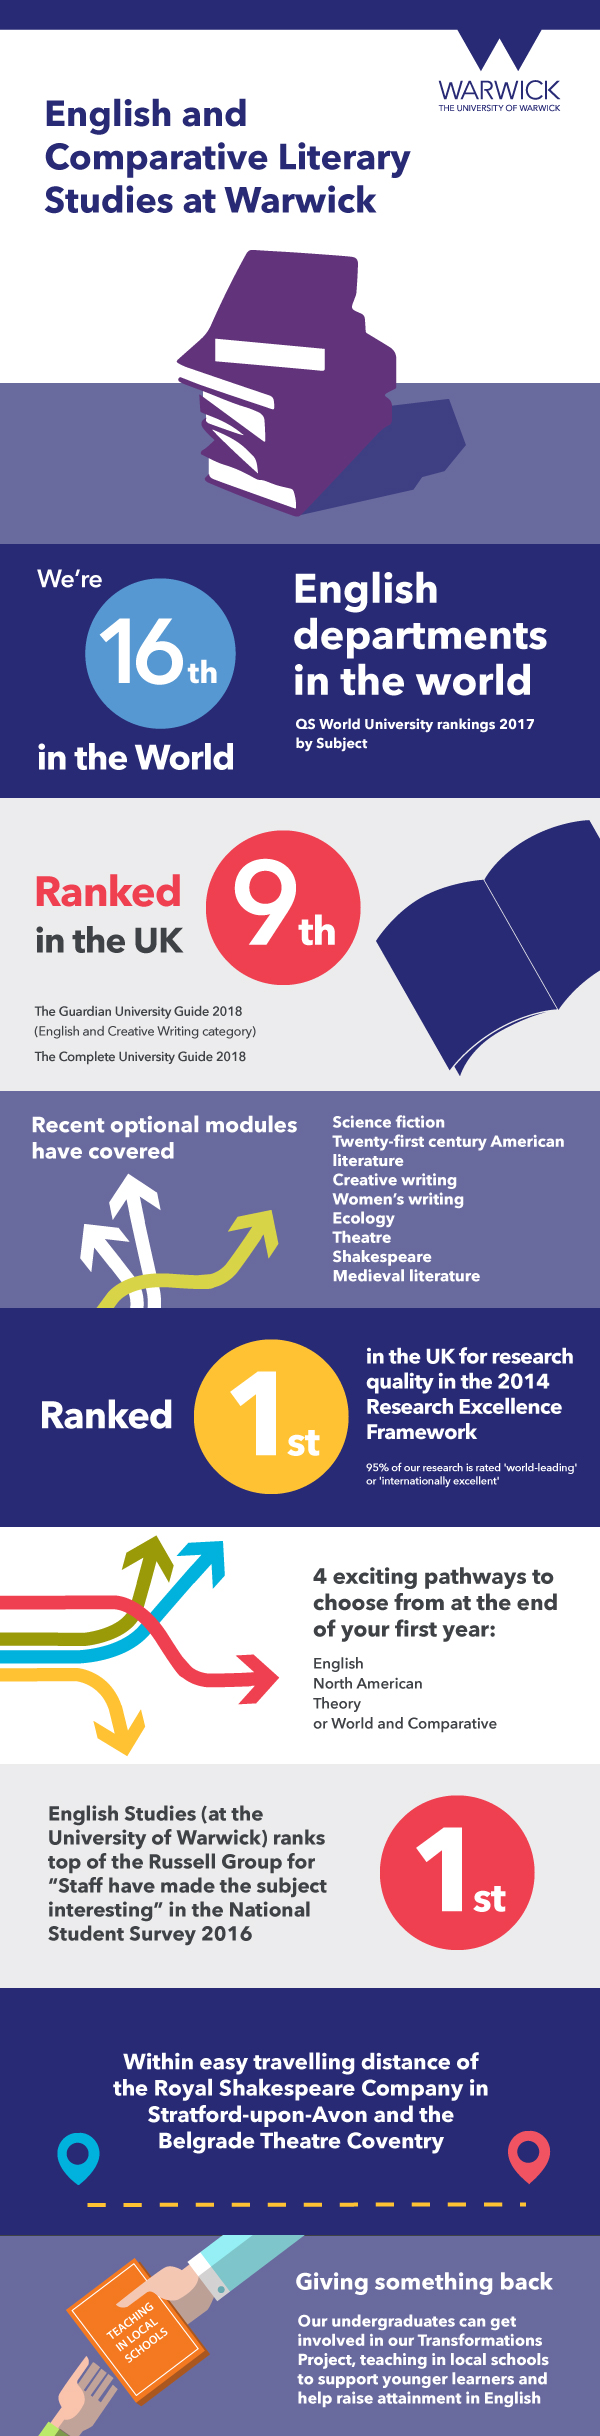 English at Warwick 2017 infographic